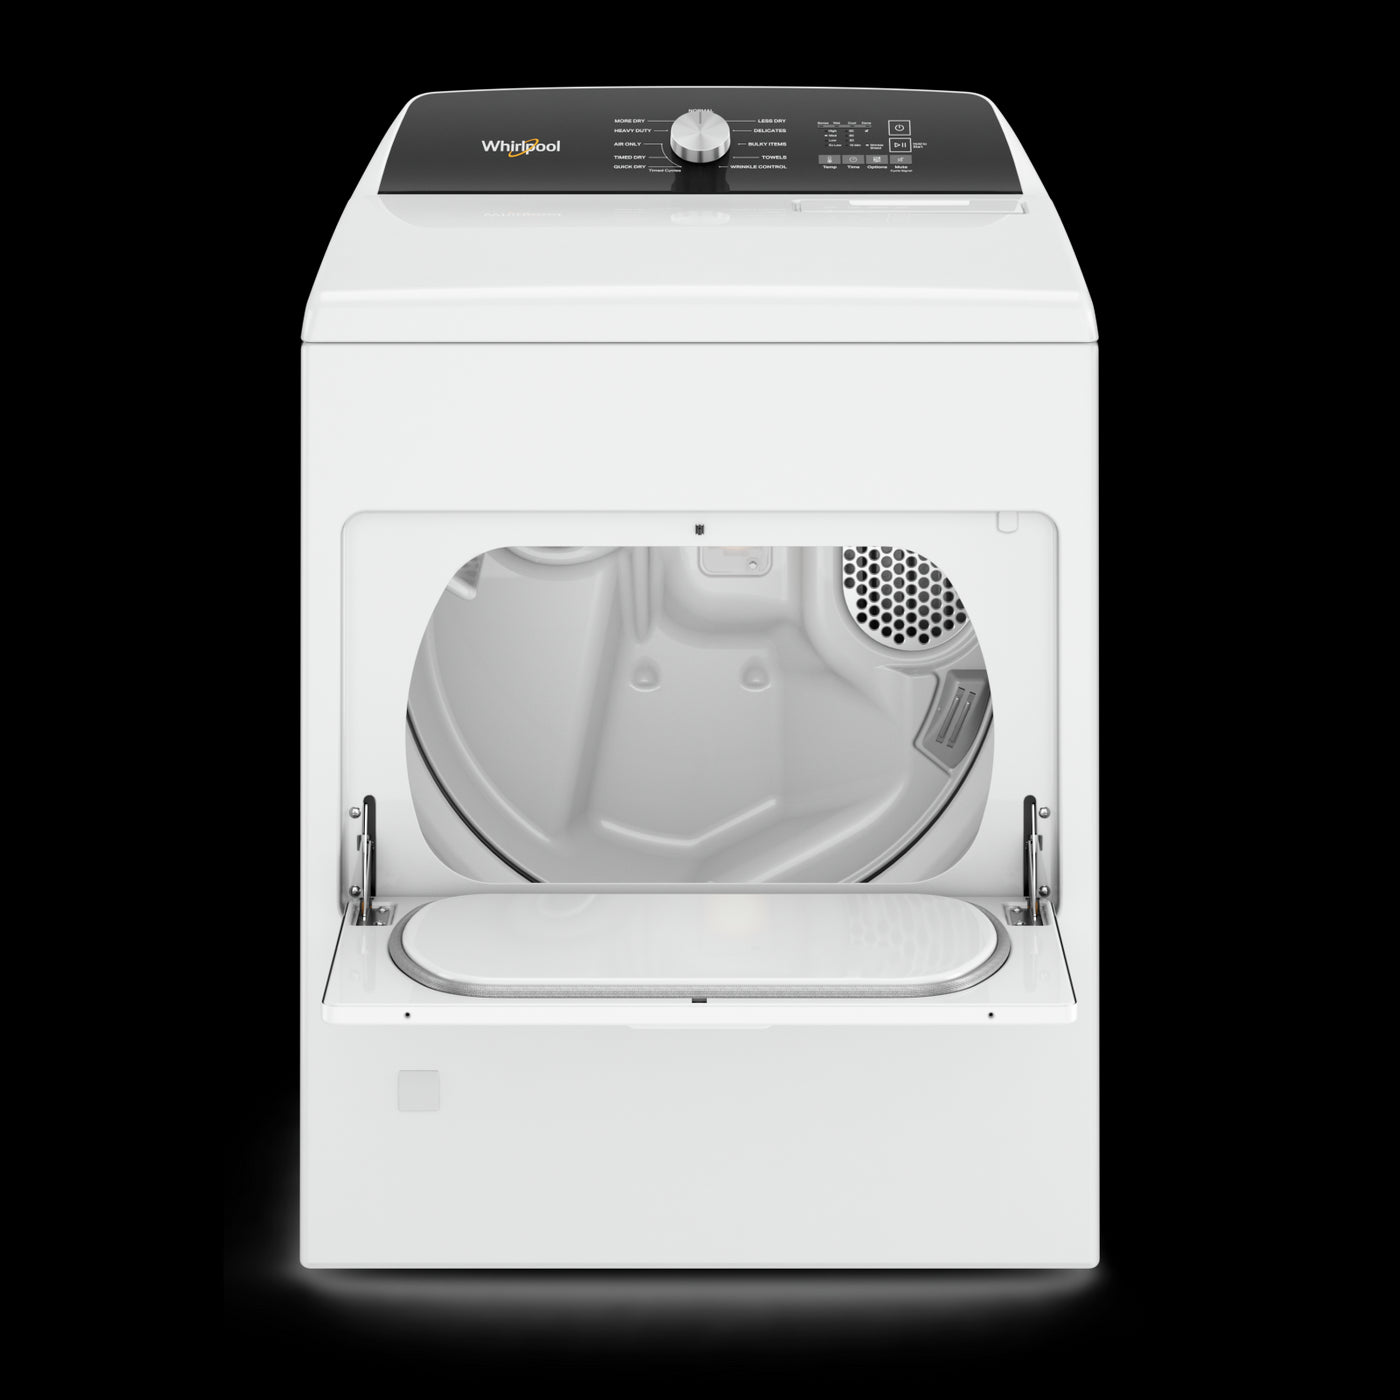 Whirlpool White Gas Dryer with Moisture Sensing (7.0 Cu.Ft) - WGD5010LW